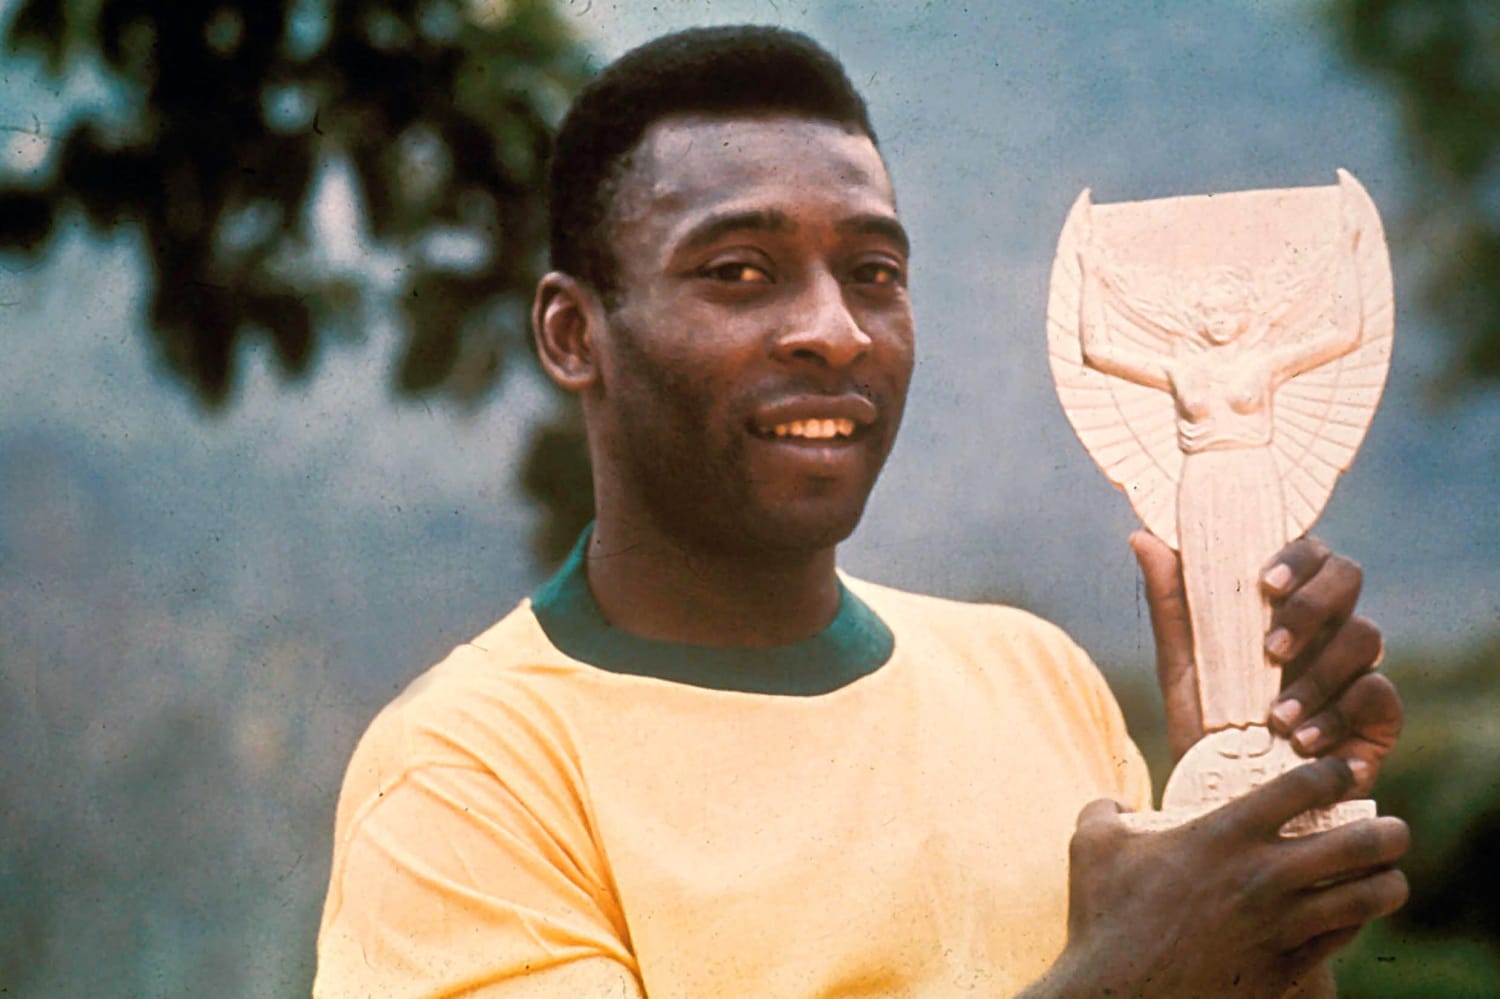 Pelé, Brazilian soccer star who won 3 World Cup matches, dies at